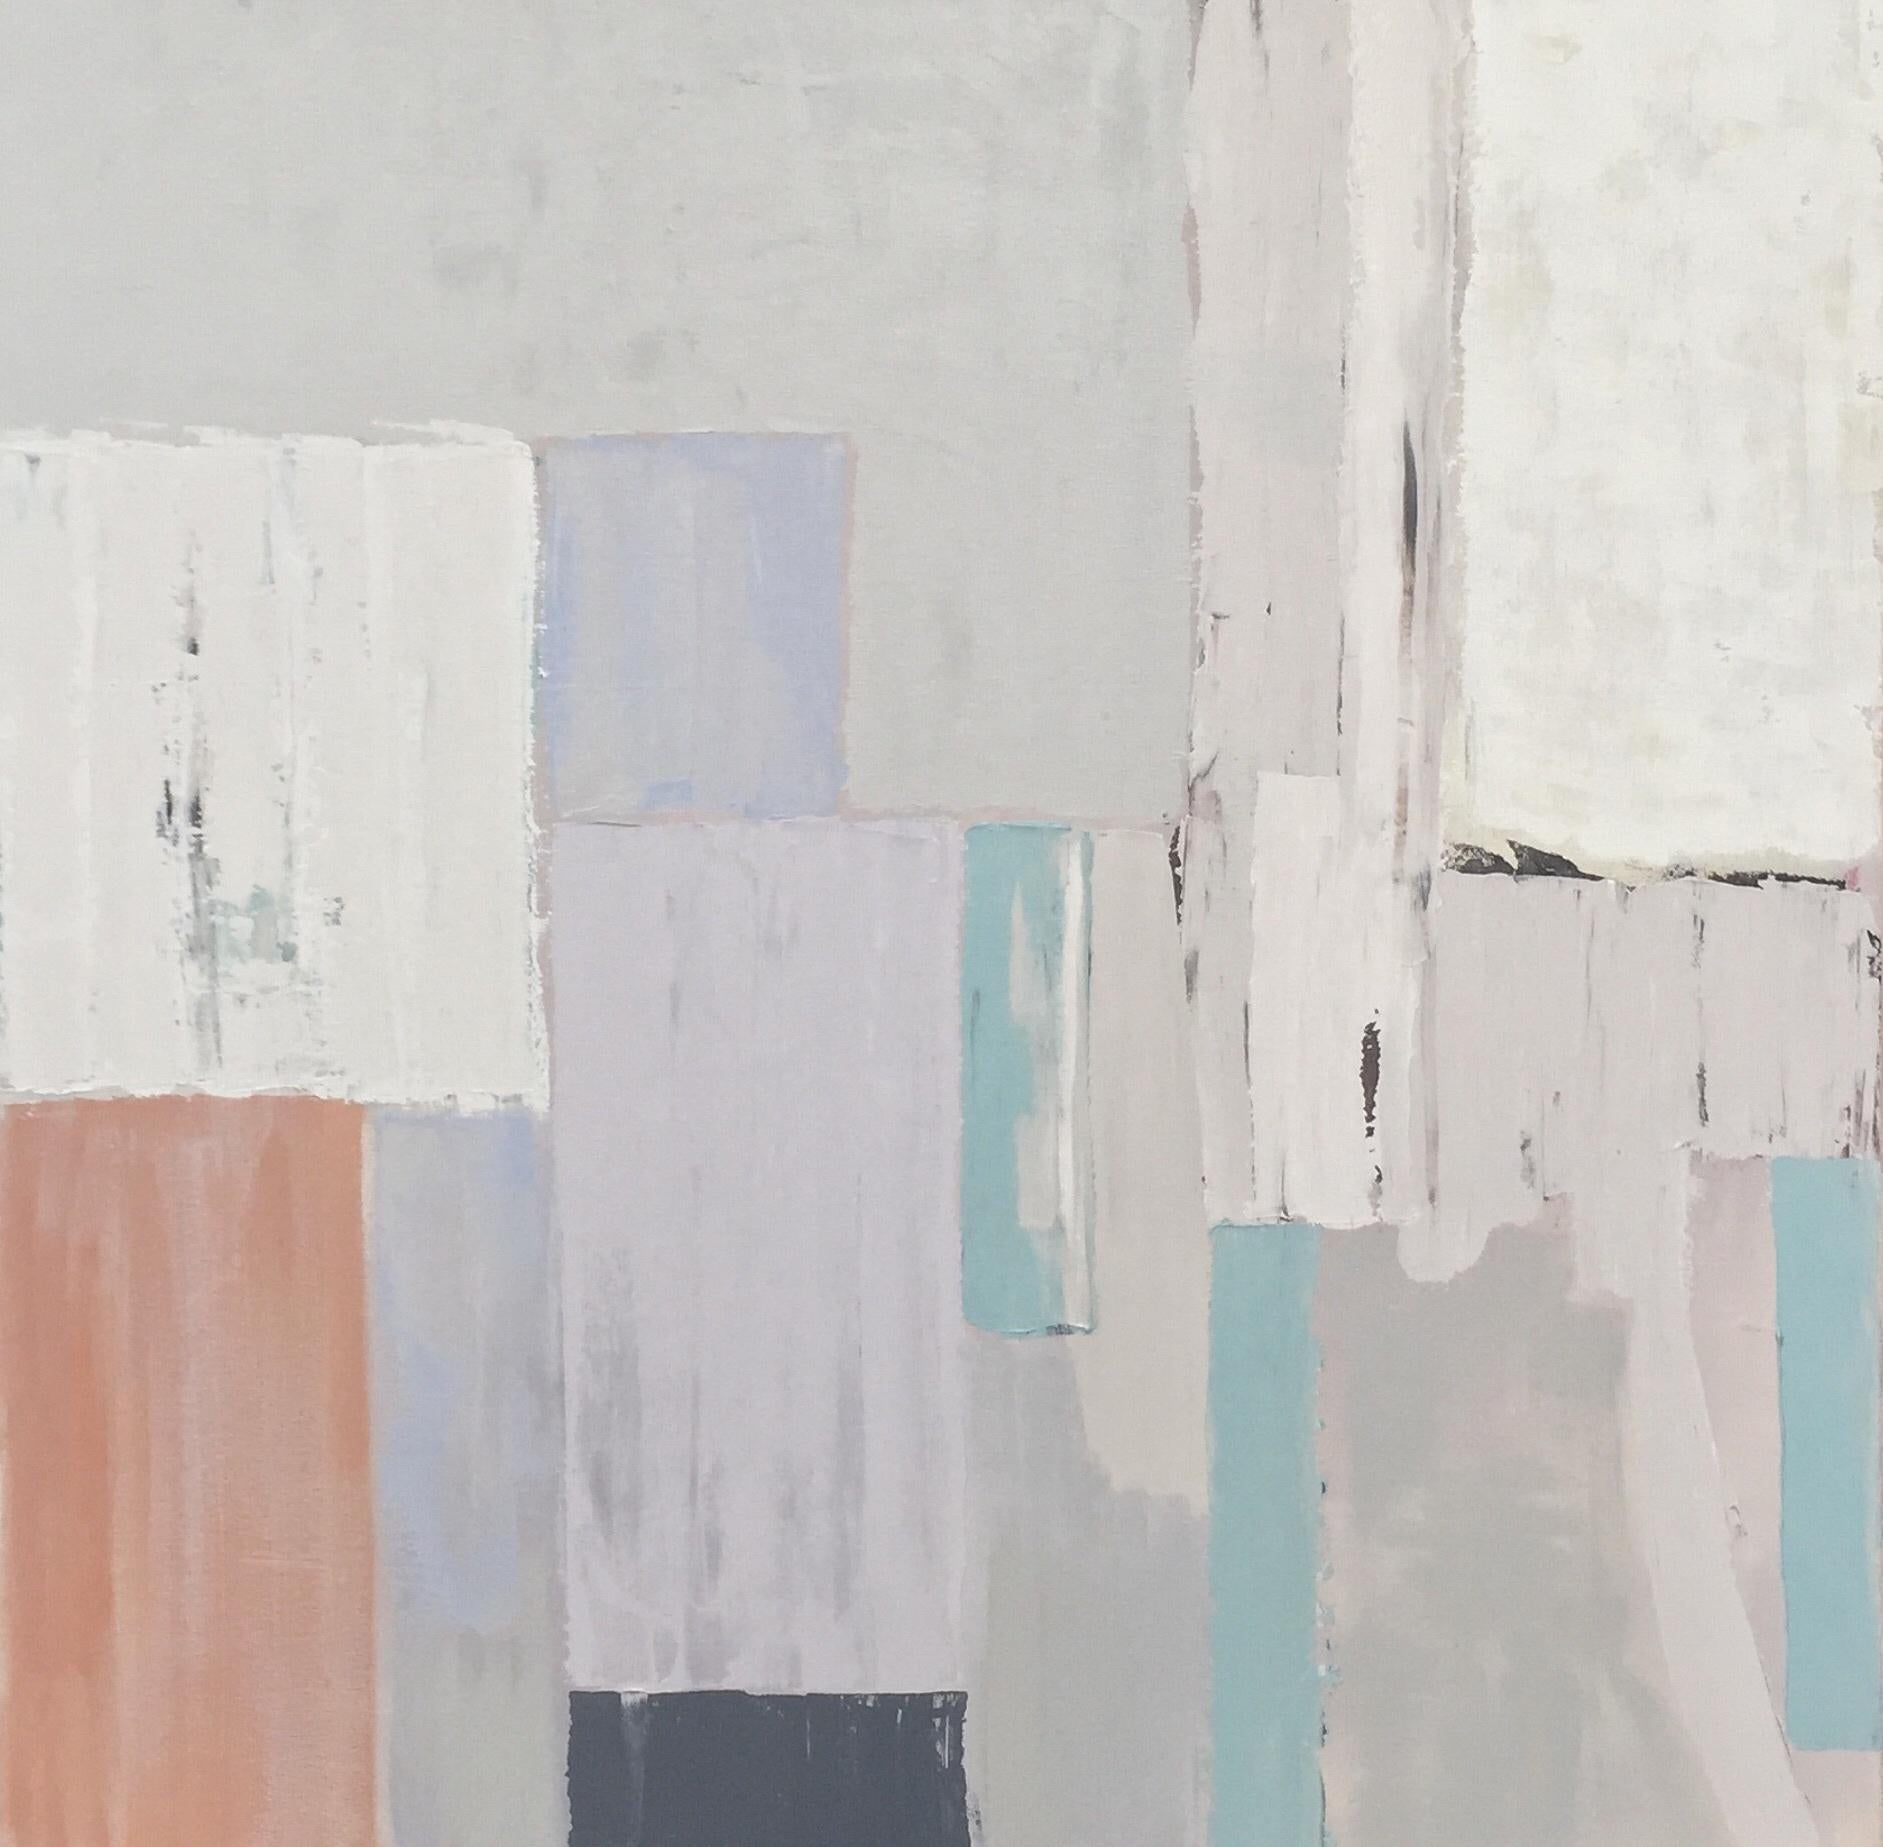 Abstract Painting Kim Romero - Porches and Balconies, peinture abstraite, acrylique sur toile, signée 